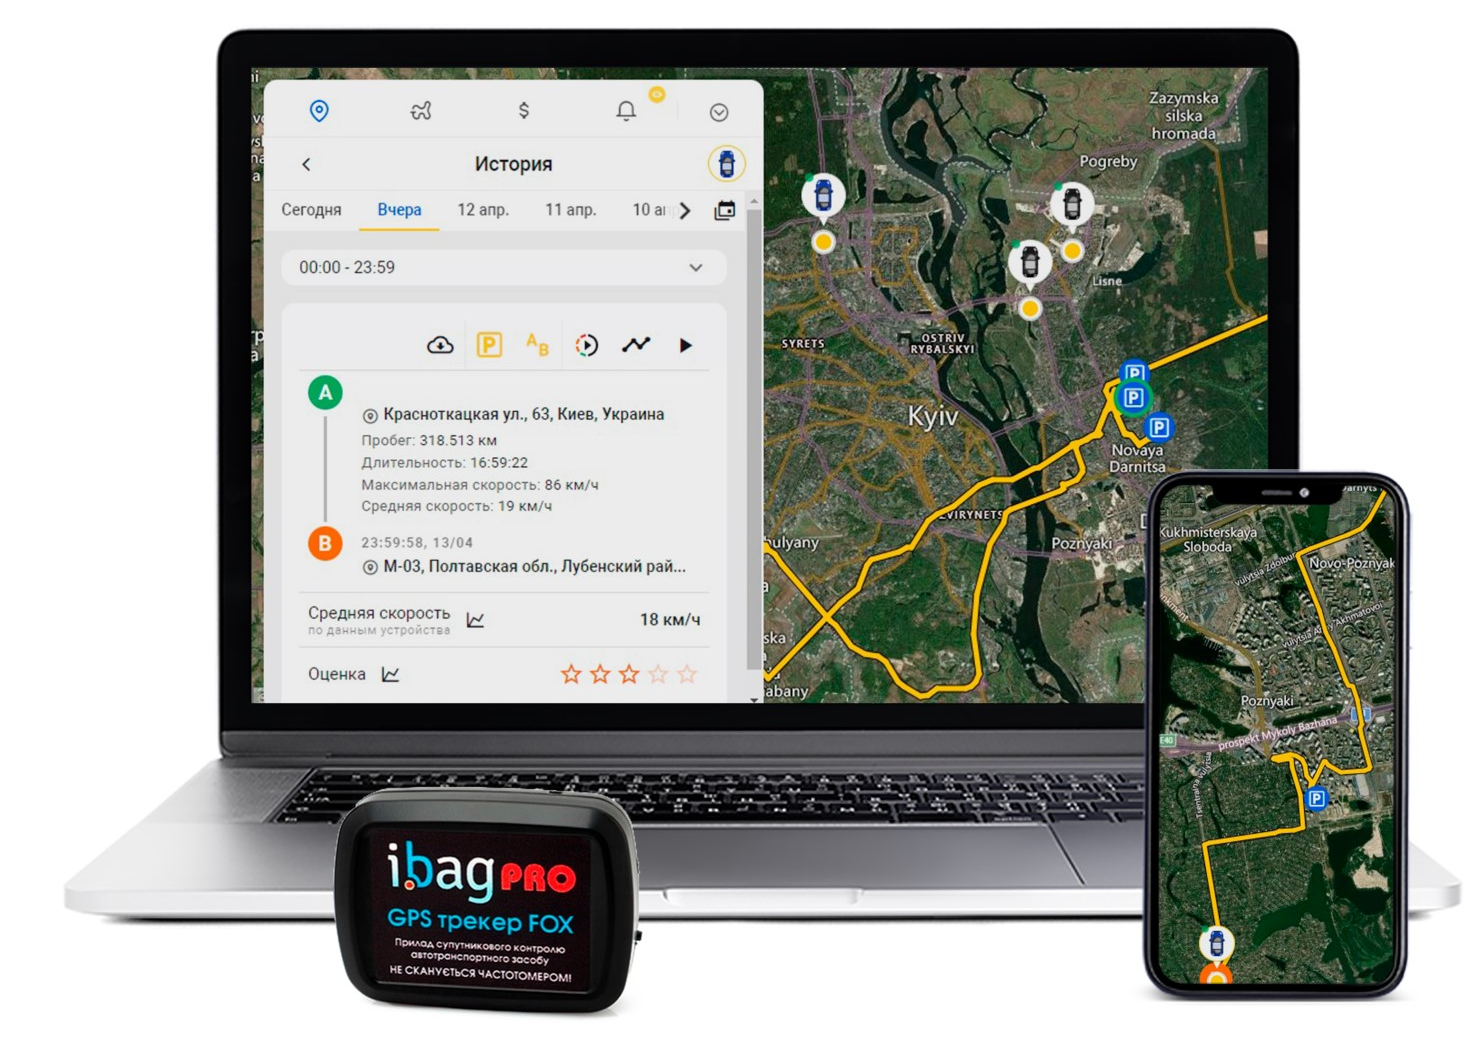 GPS tracking app